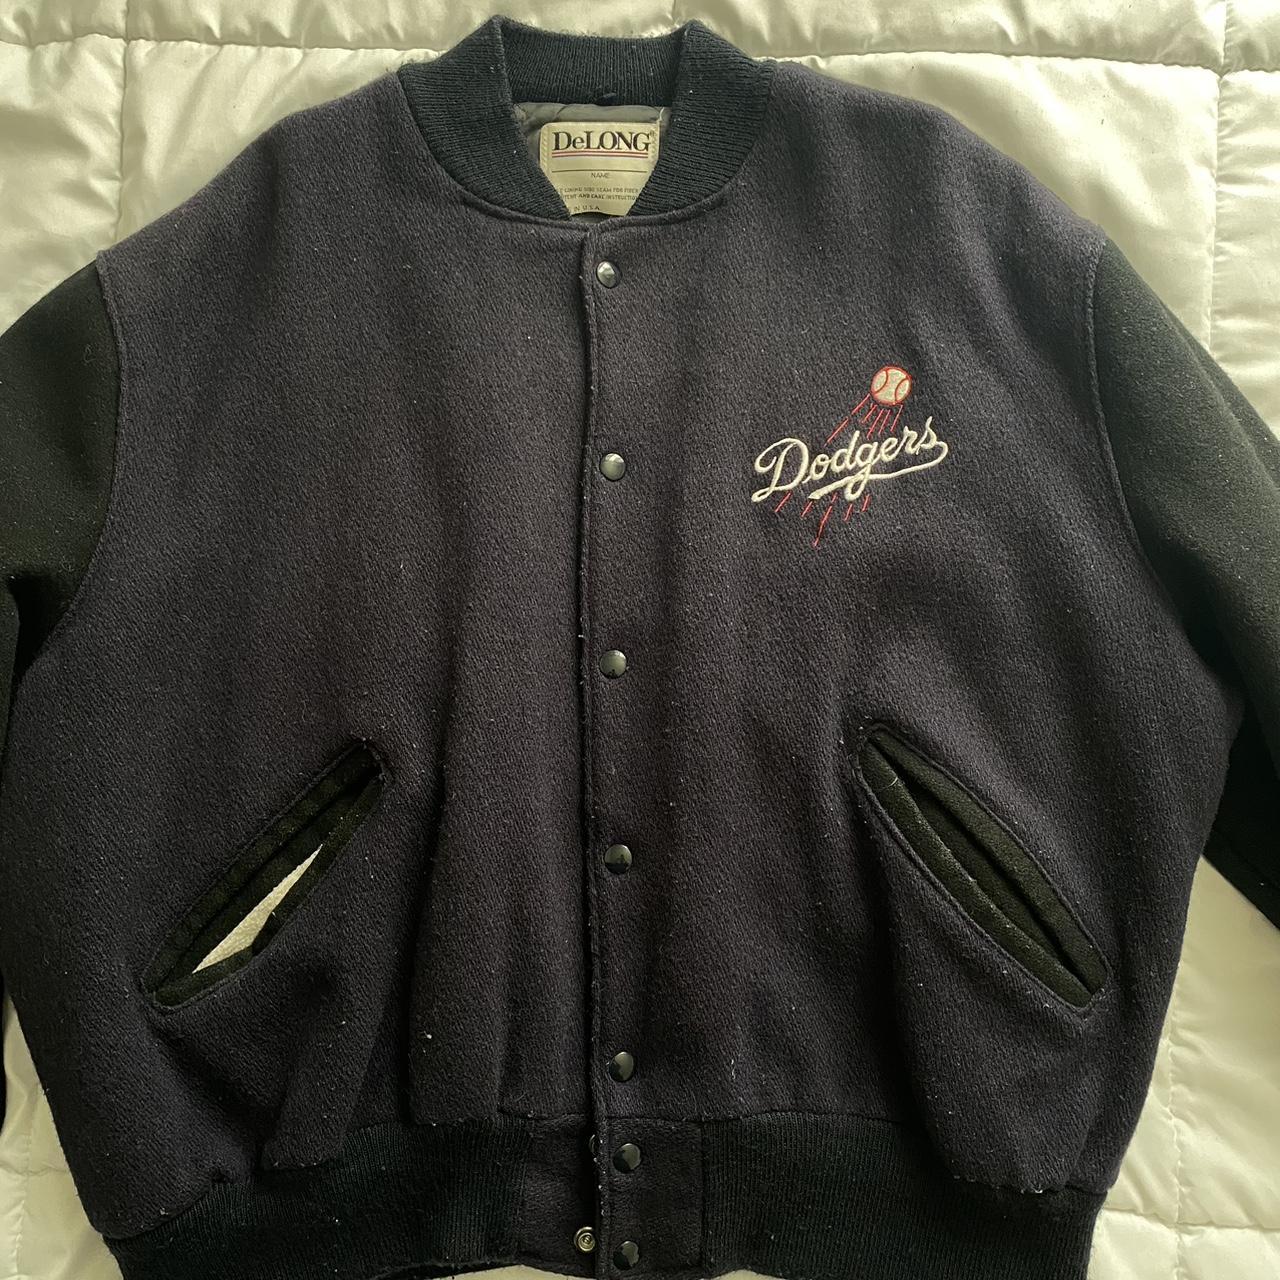 Los Angeles Dodgers Vintage Jacket Black and white - Depop